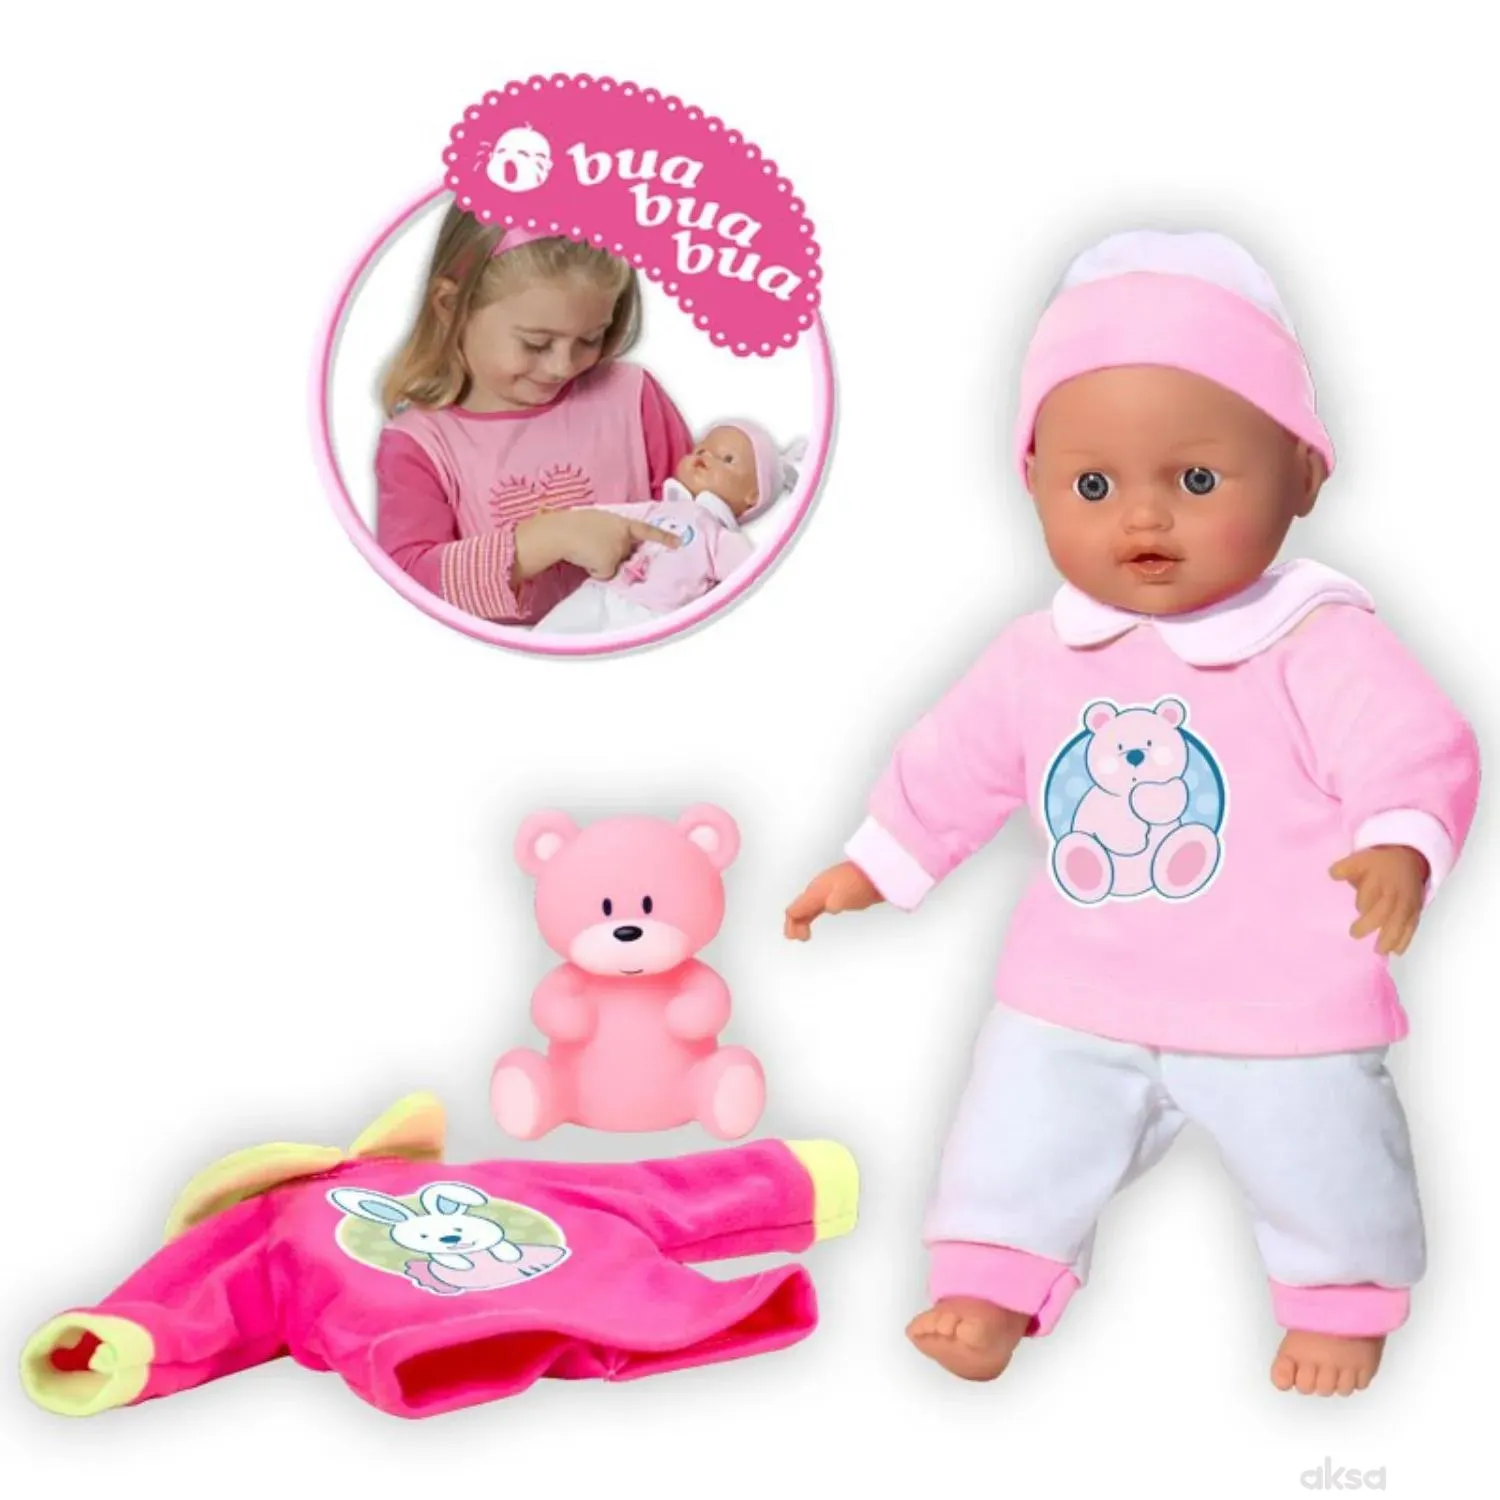 Loko toys,lutka beba sa funkcijama sa odjećom, 30cm 